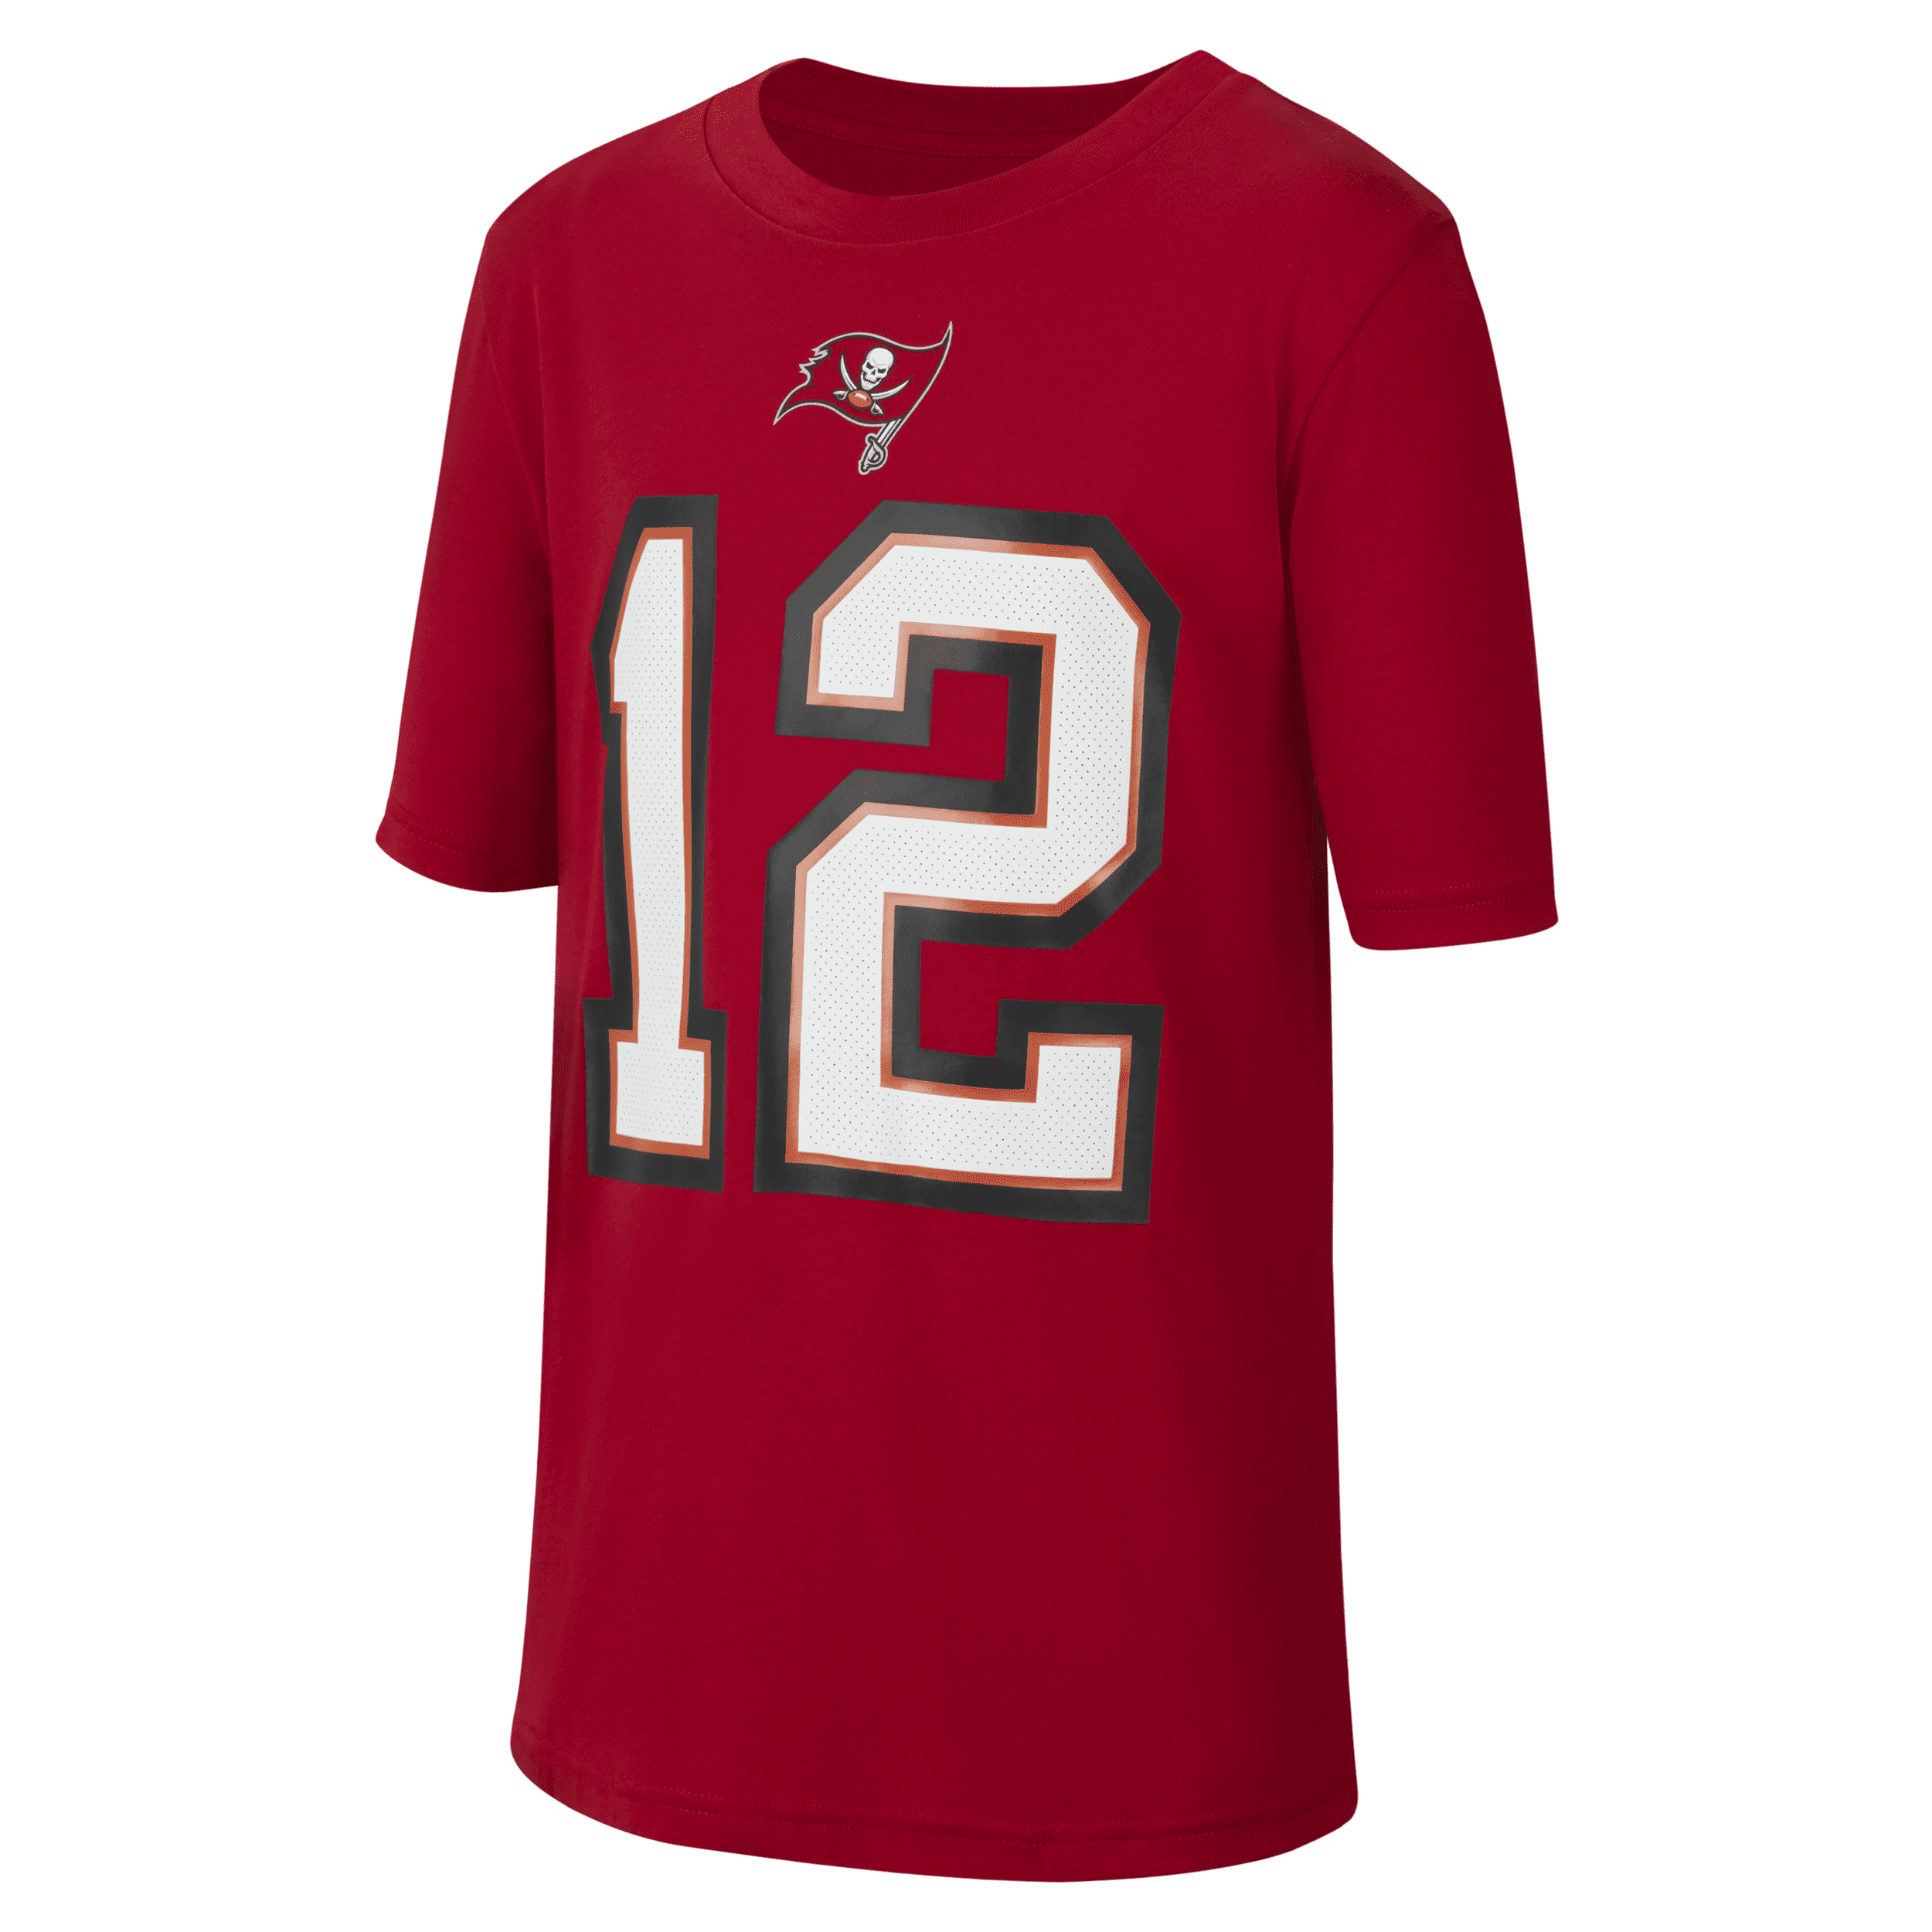 T-shirt Nike (NFL Tampa Bay Buccaneers) – Ragazzi - Rosso